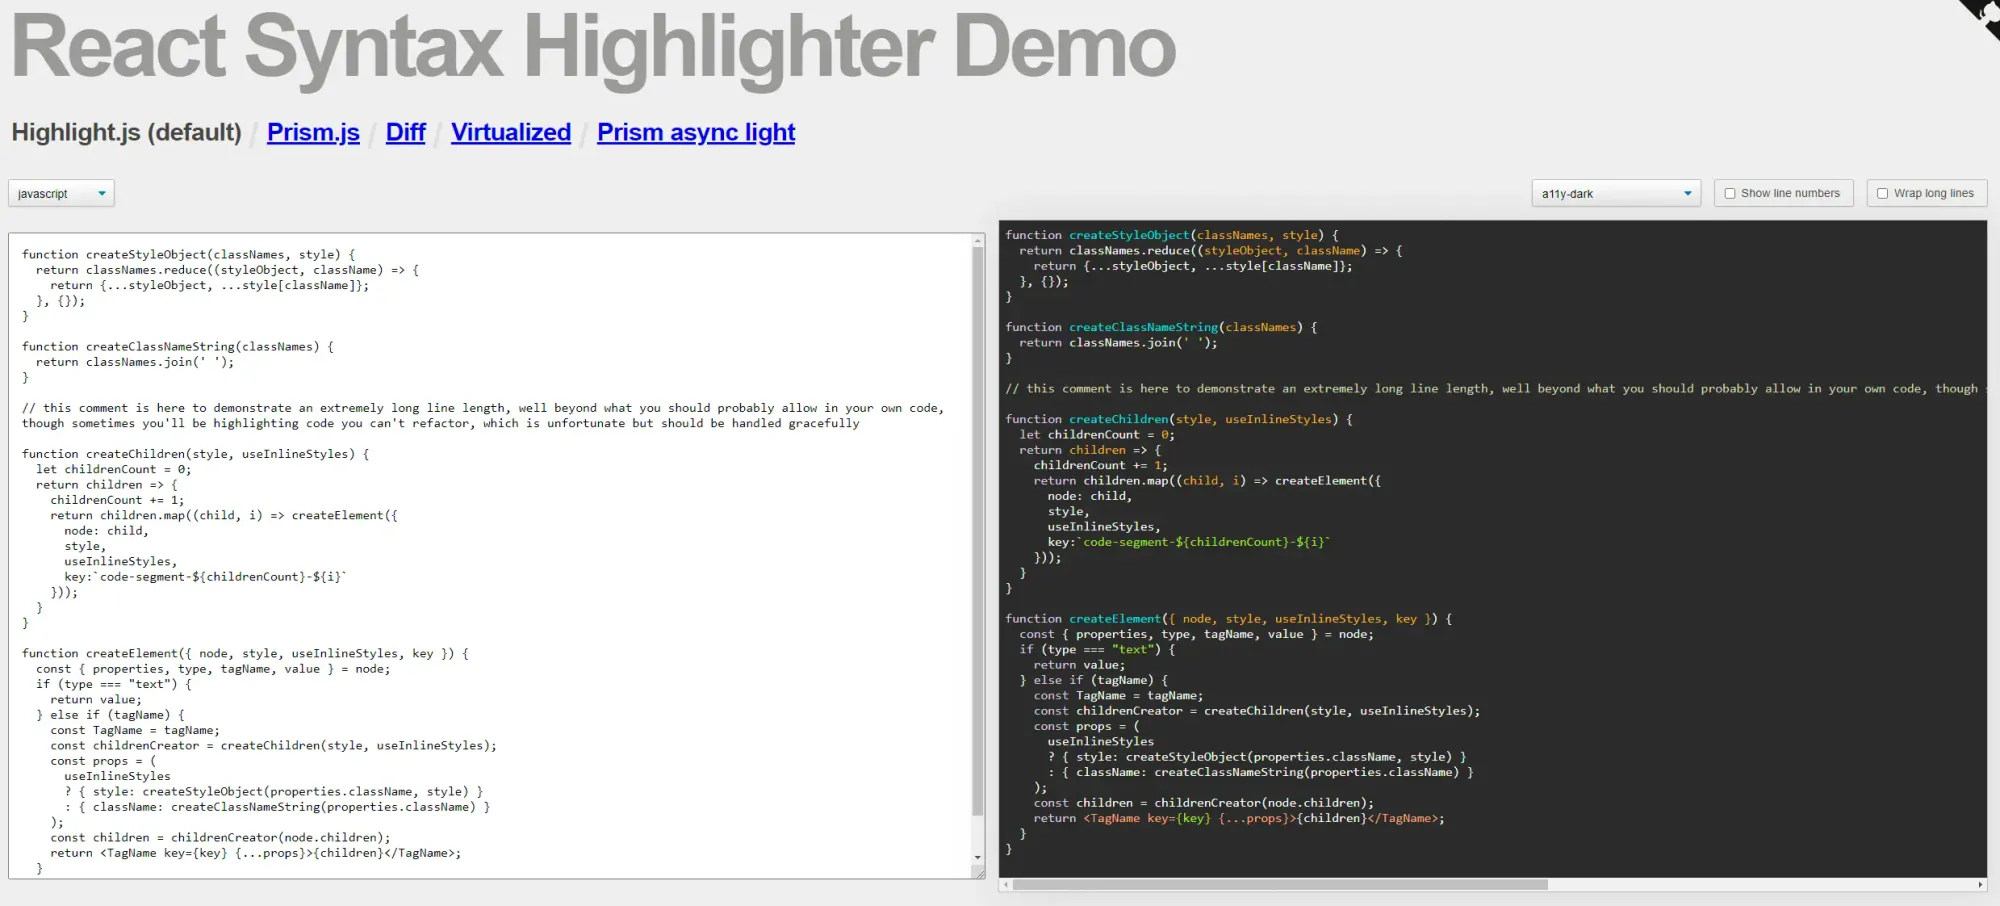 Screenshot of React Syntax highlighter project website taken by pauls dev blog